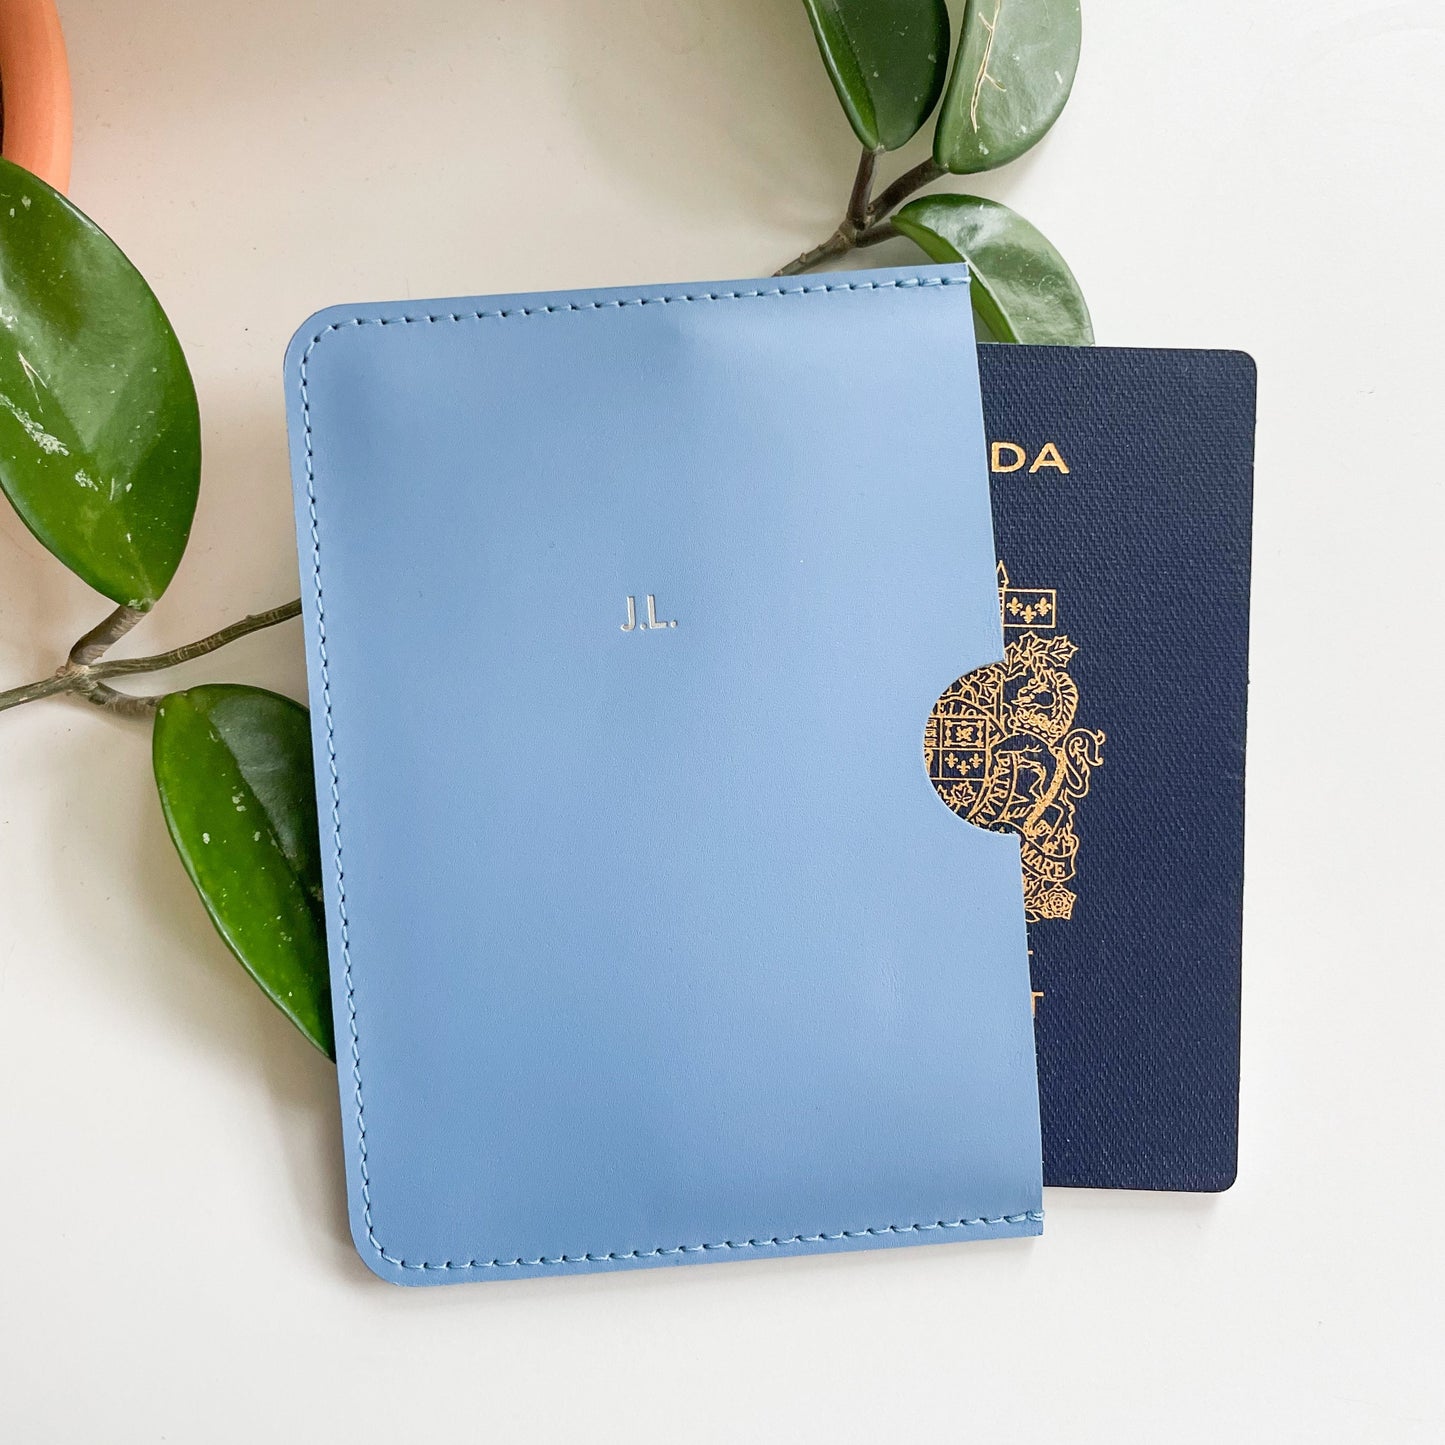 Passport Sleeve with Card Pocket | Cherry